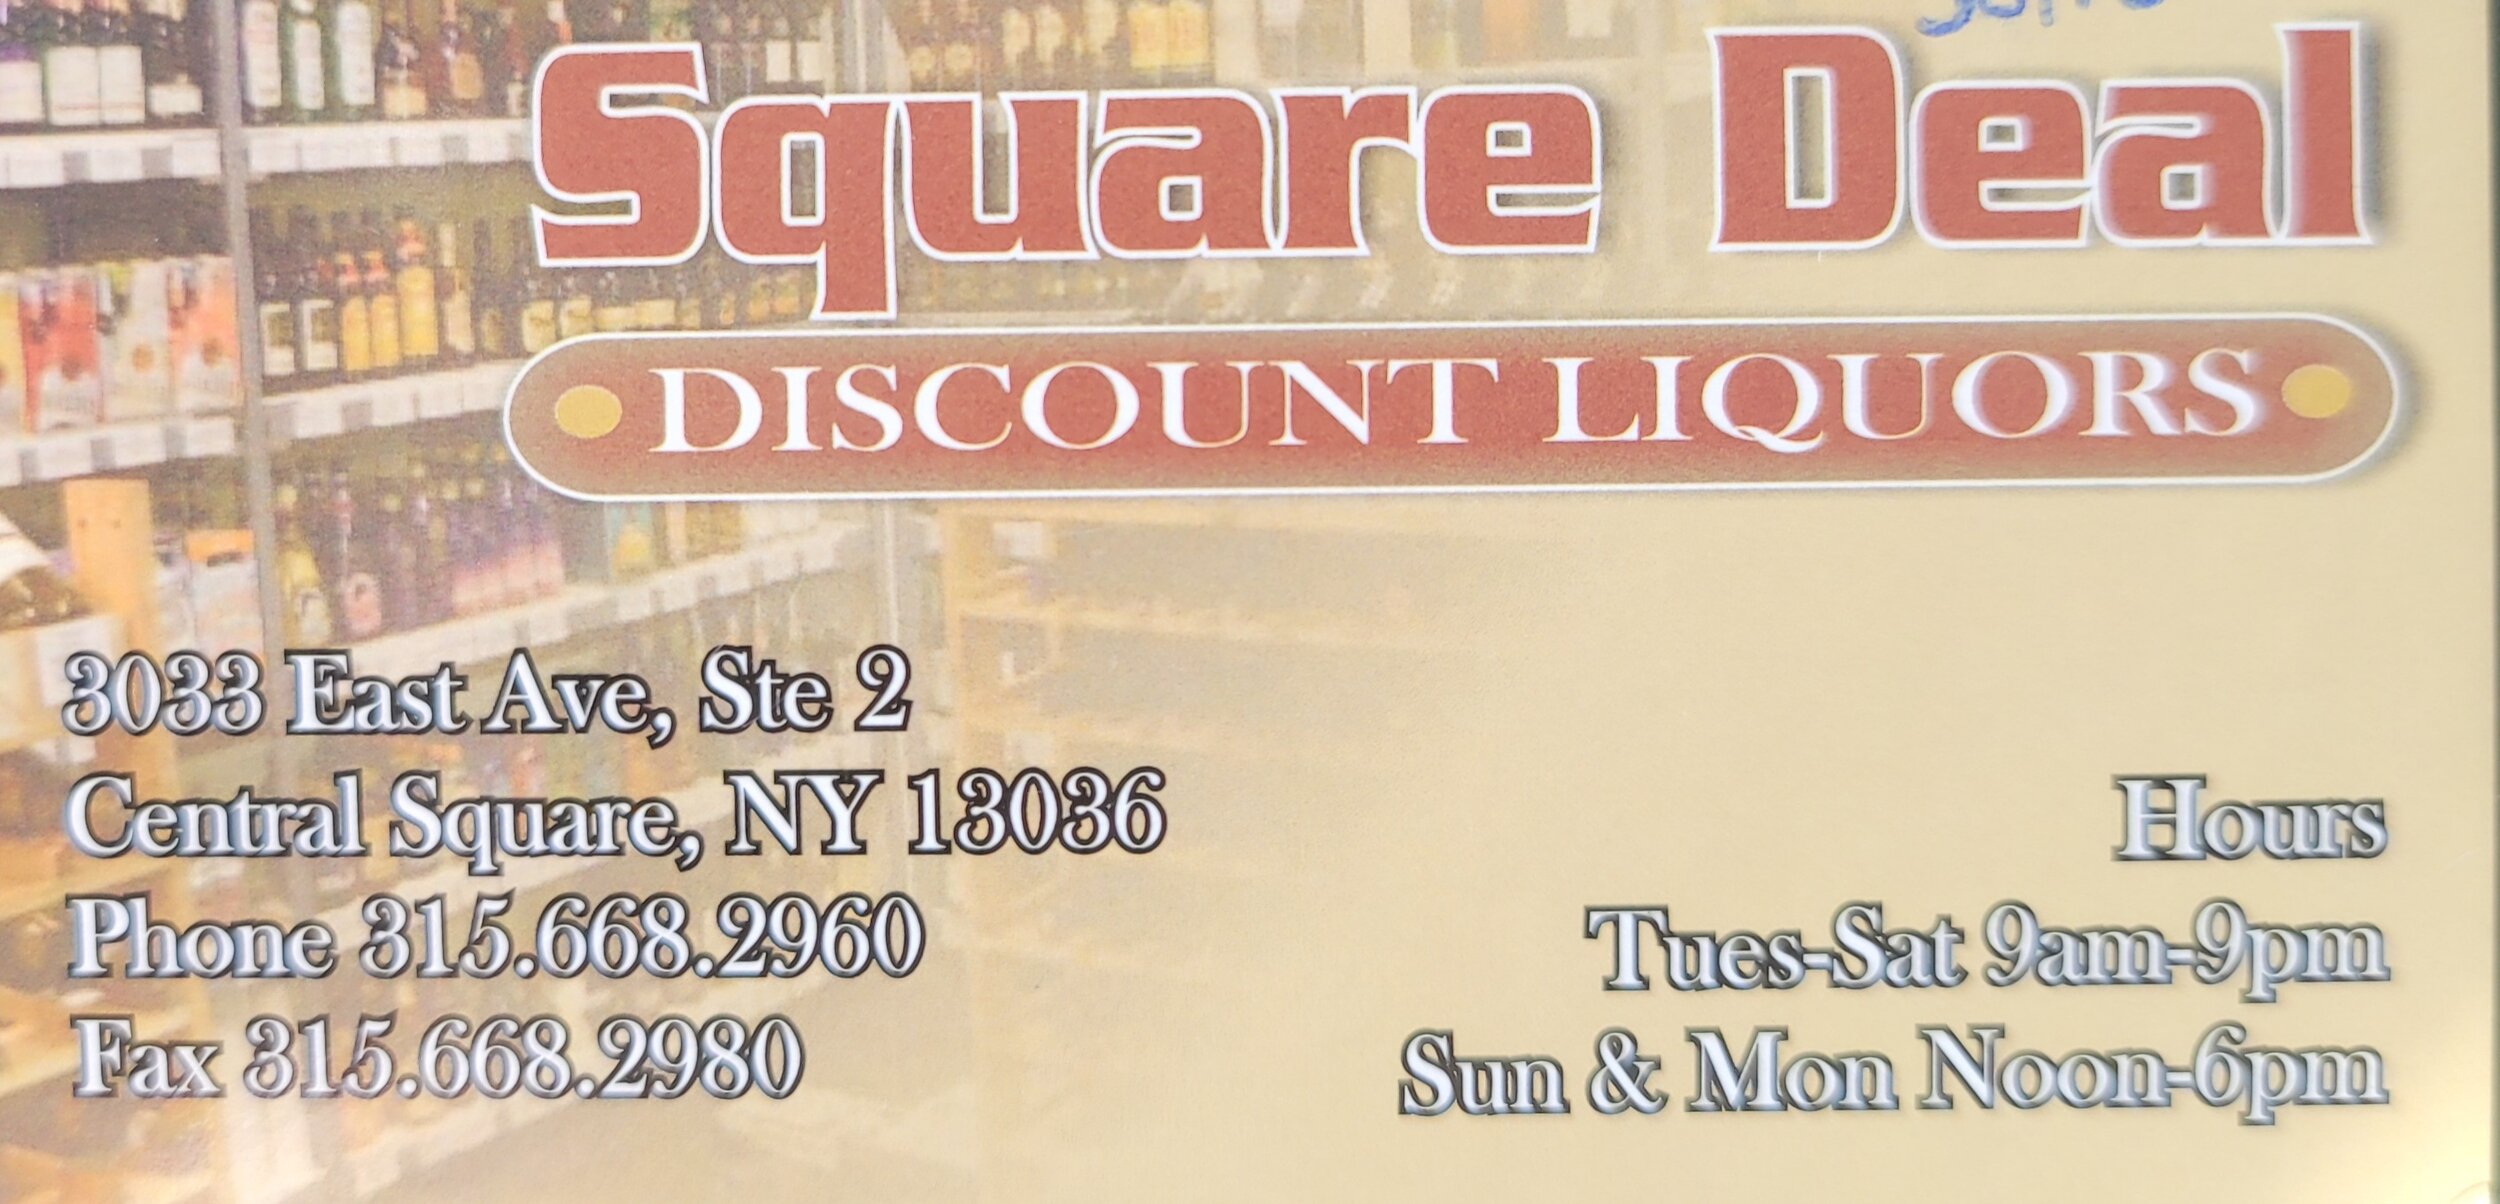 Square Deal Discount Liquor - Central Square, NY